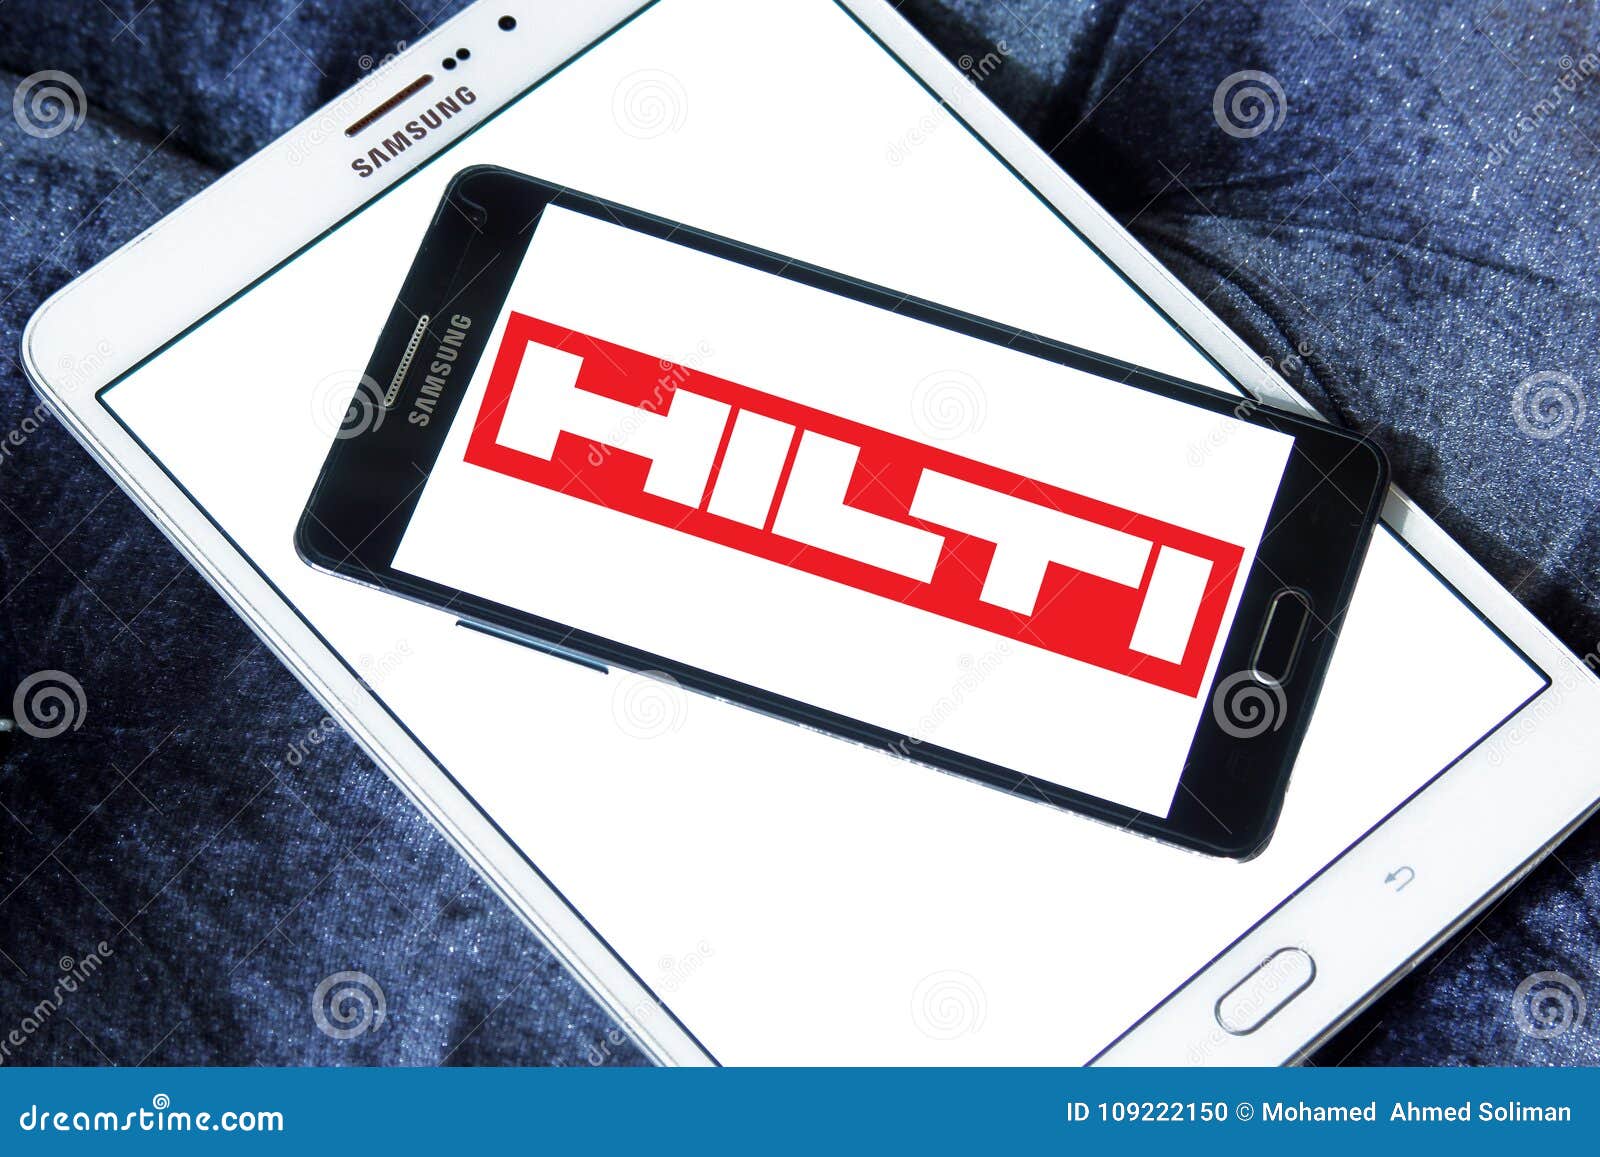 Hilti company logo editorial image. Image of company - 109222150